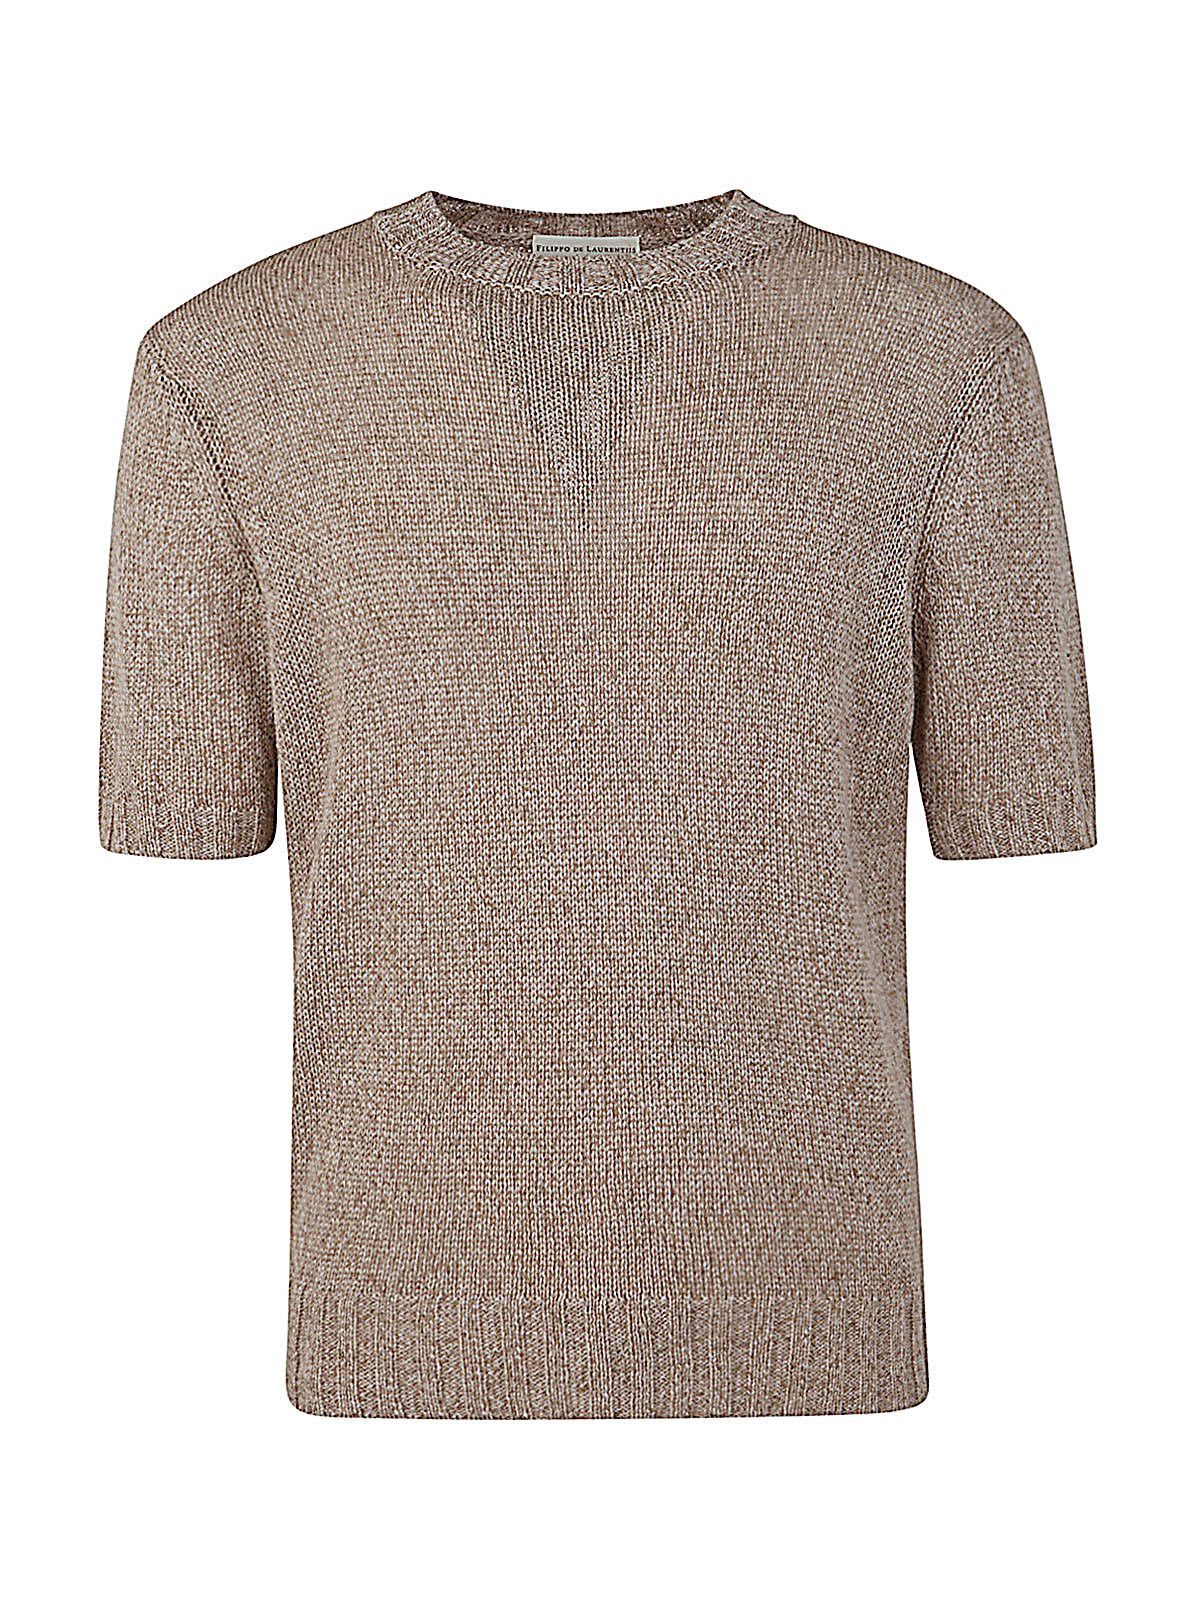 Shop Filippo De Laurentiis Mens Tshirt: Round Neck Pullover